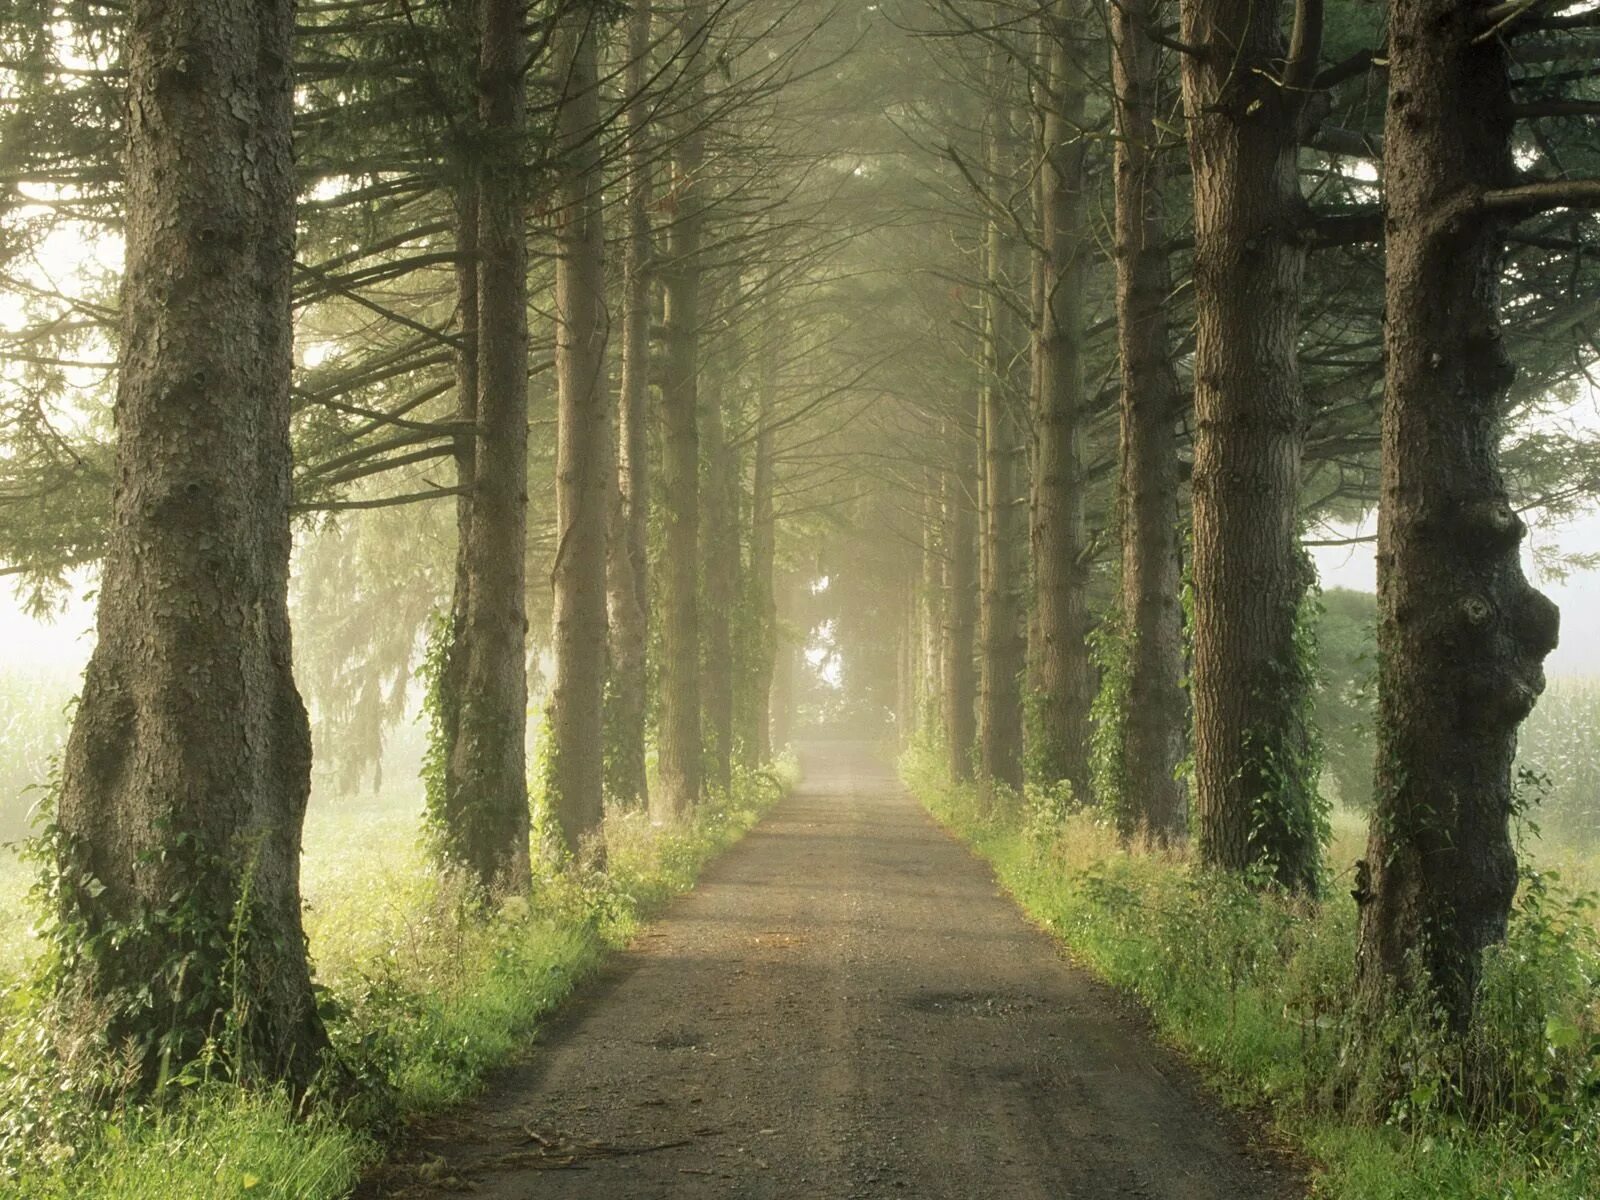 Дорога ведет в лес. Дорога в лесу. Лесная дорога. Тропинка в лесу. Дорога в лесу перспектива.